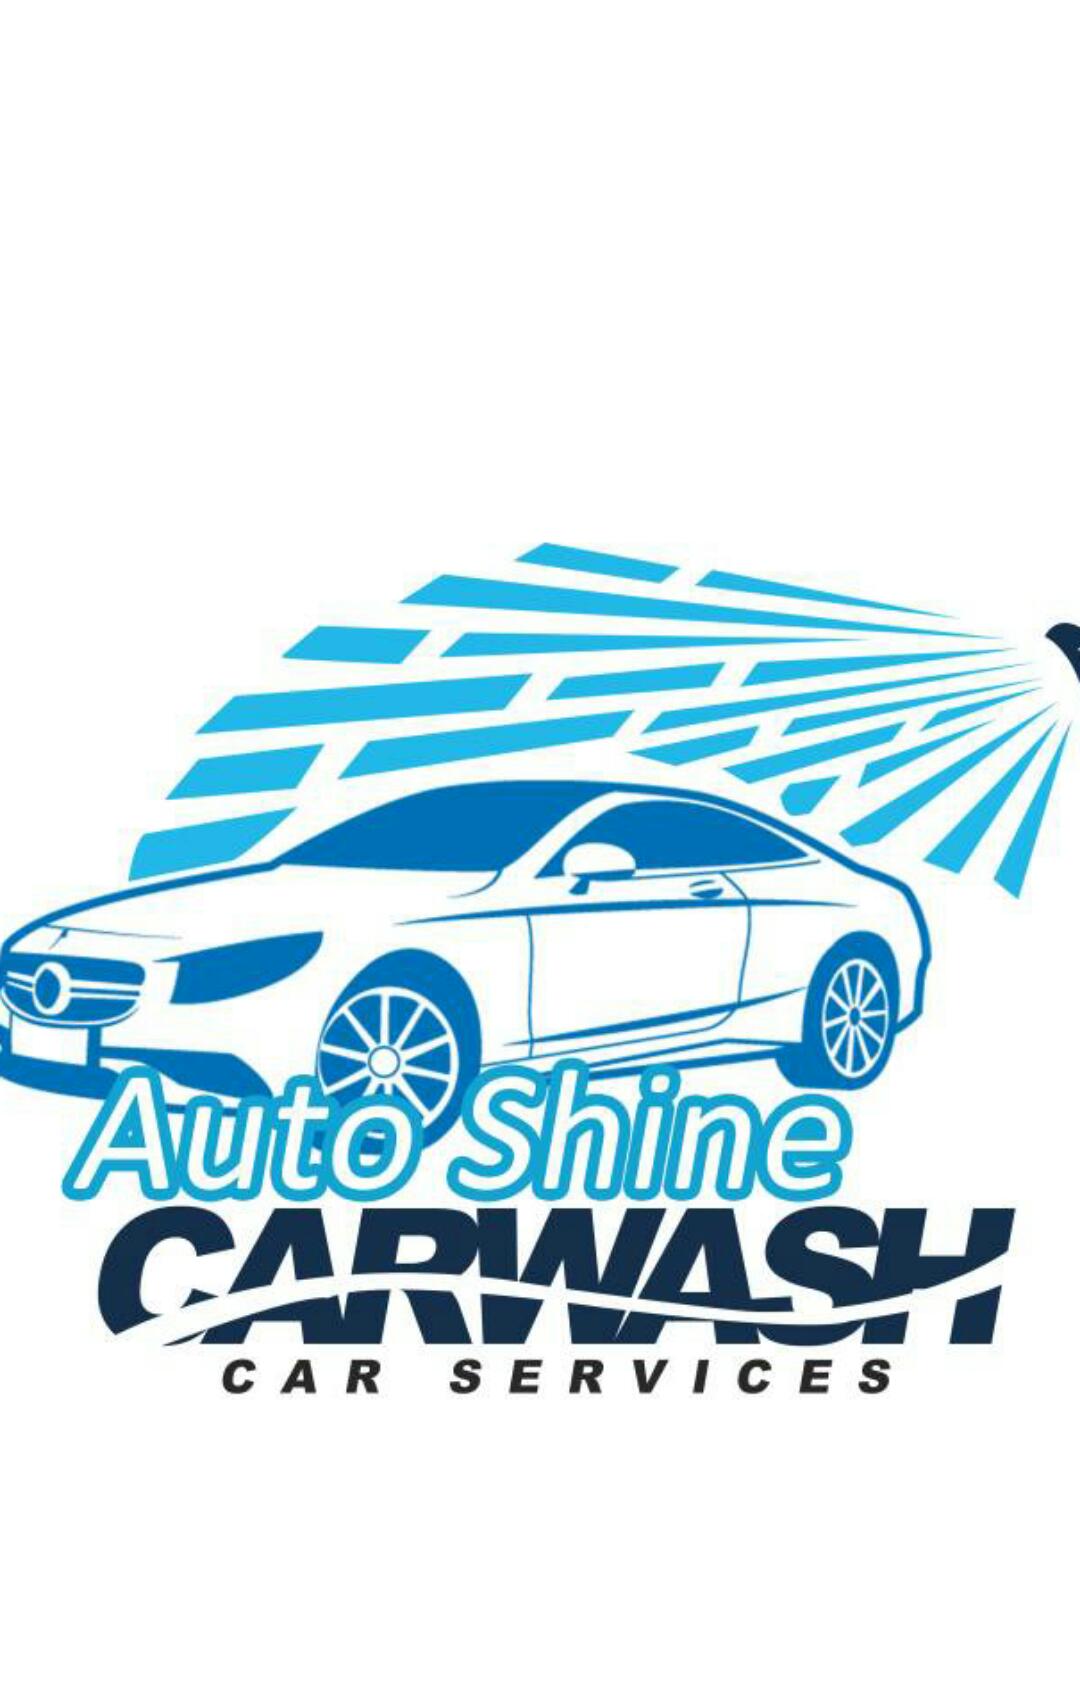 Autoshine carwash & service